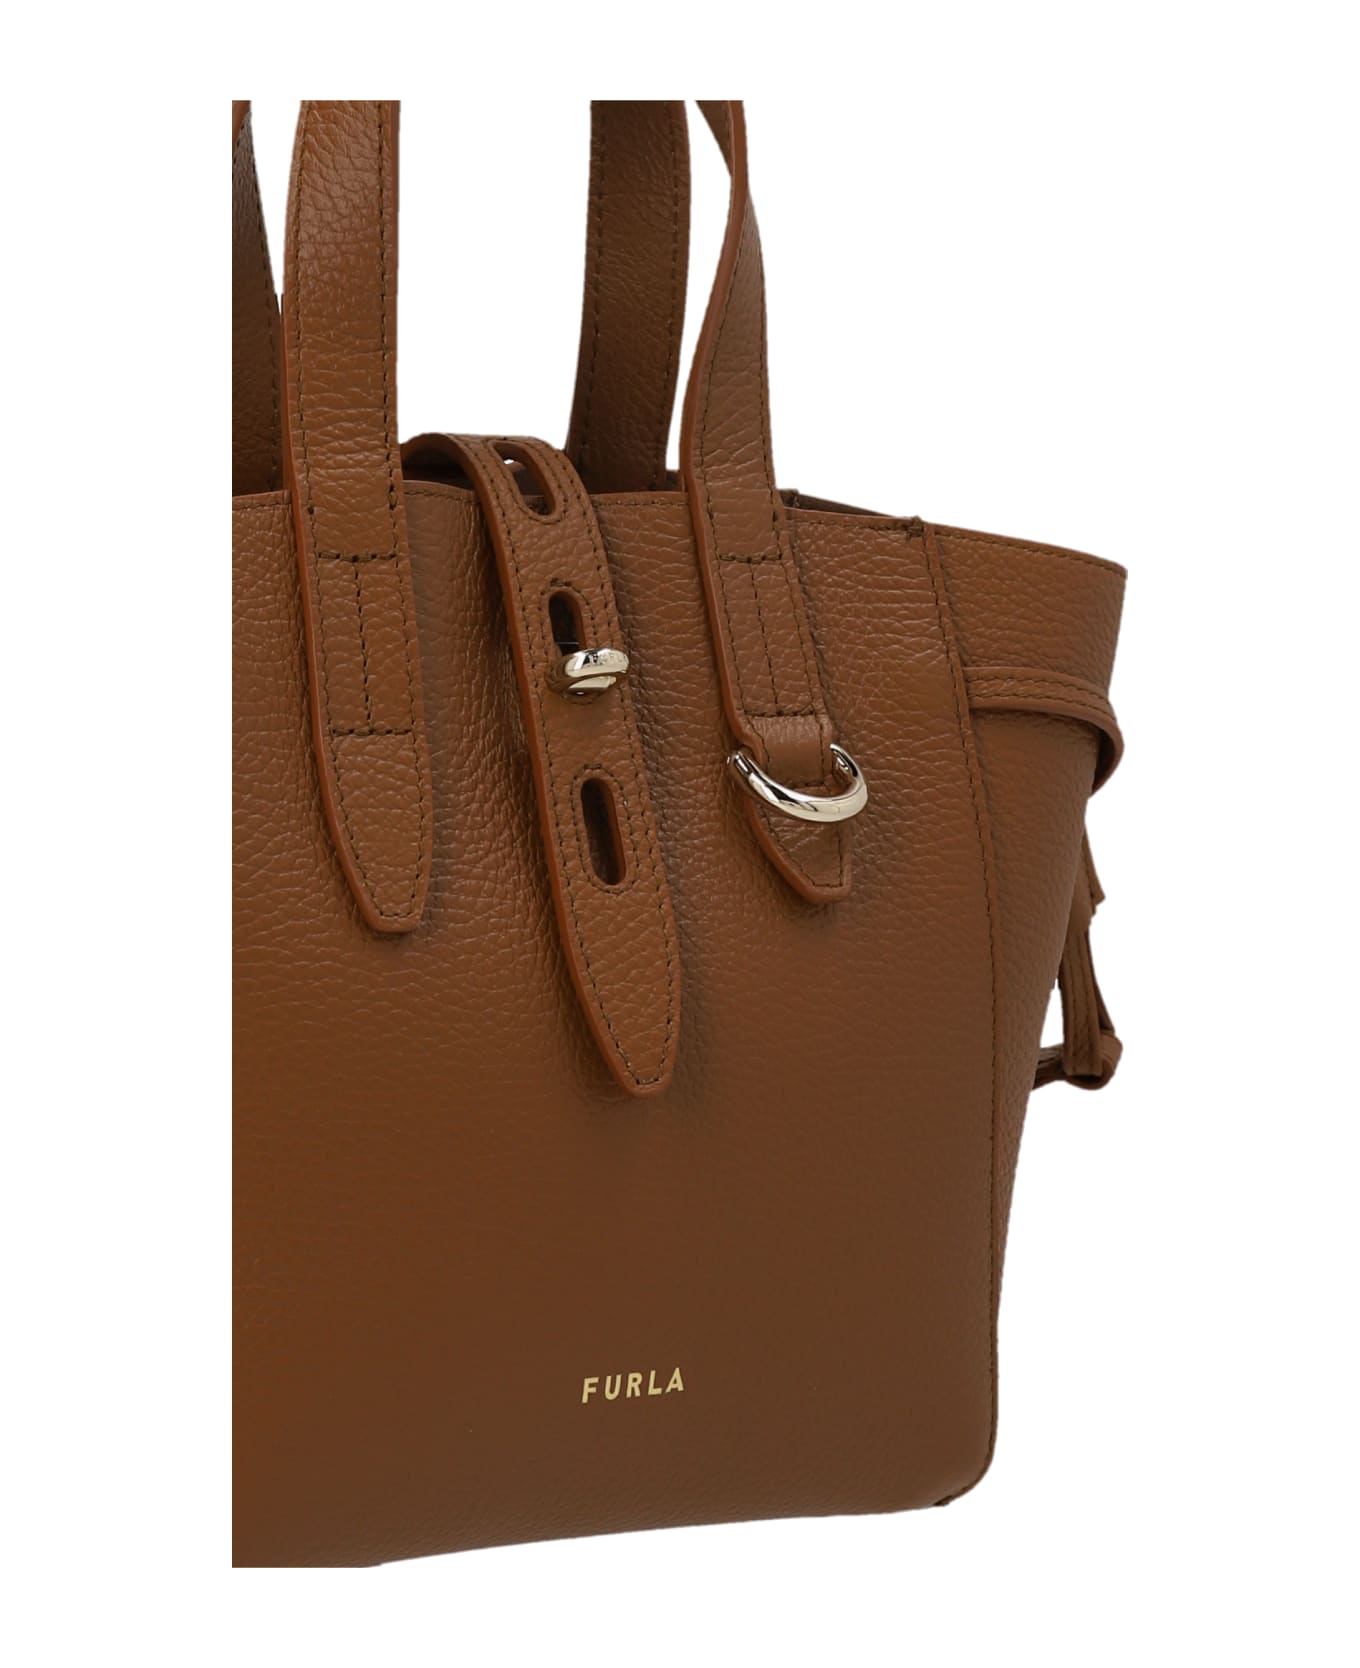 Furla 'furla Net' Handbag - Leather トートバッグ